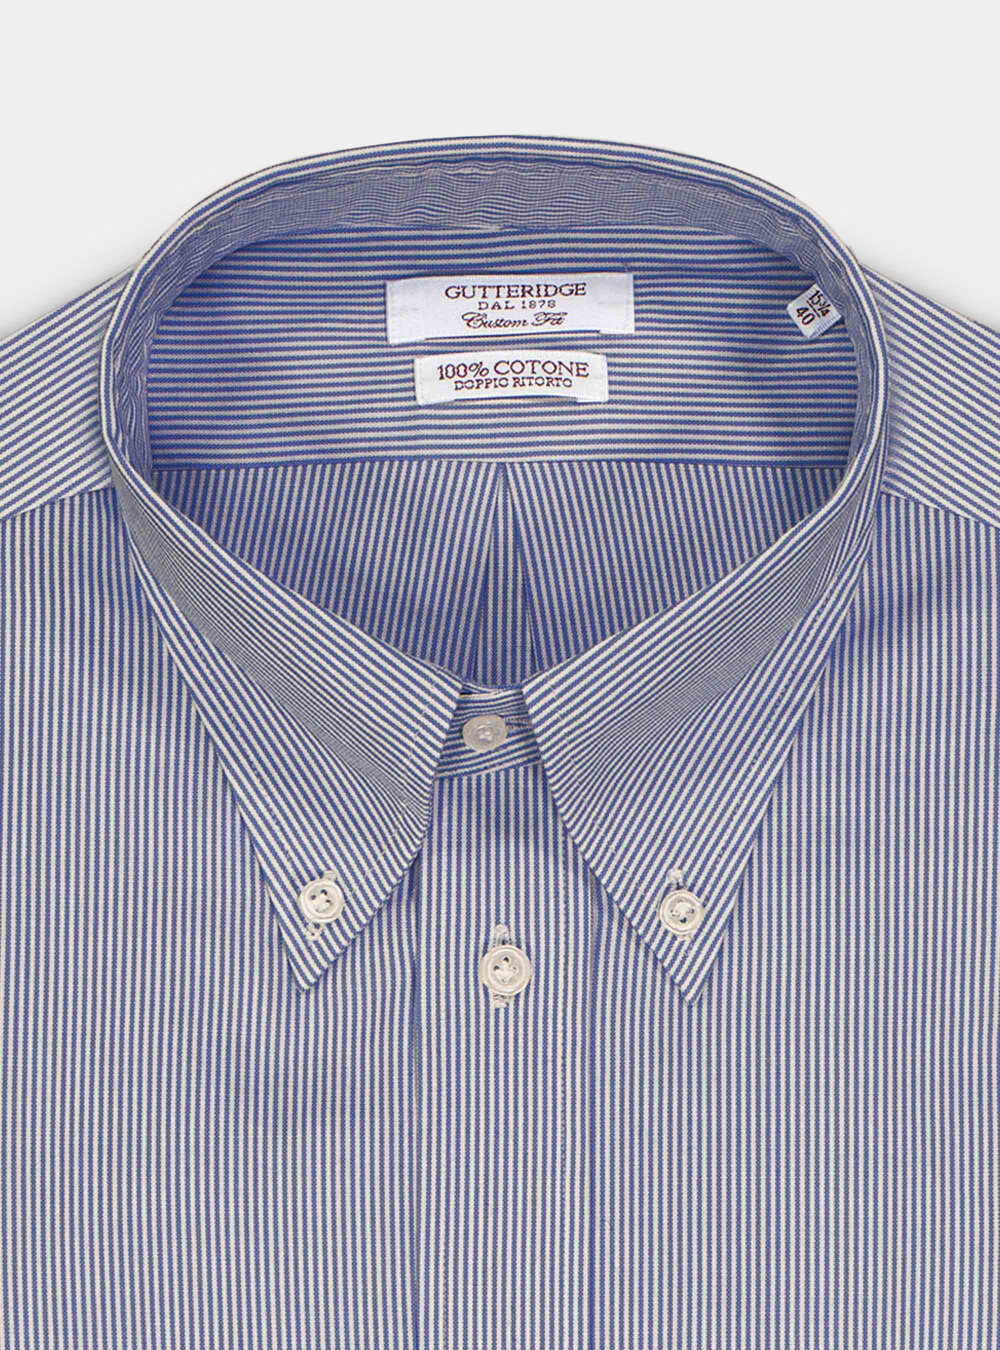 Oxford striped Custom button down collar shirt | GutteridgeEU | Shirts Uomo